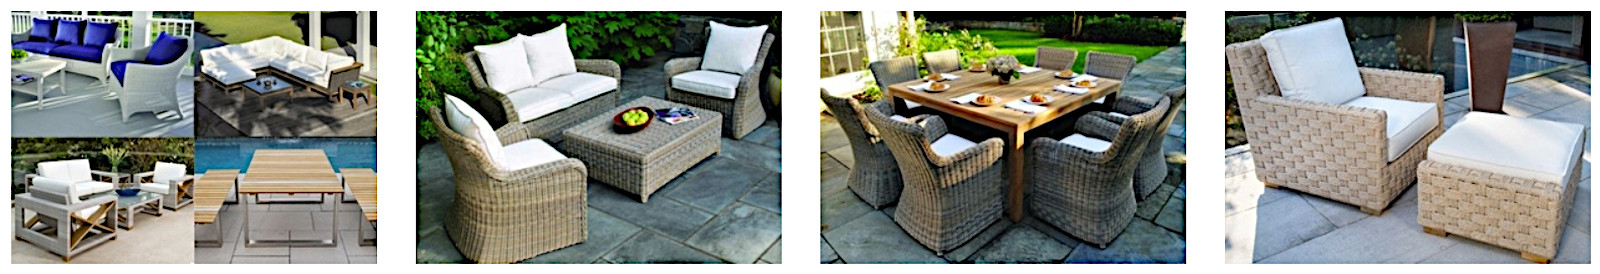 Bargain Price Kingsley Bate teak garden furniture